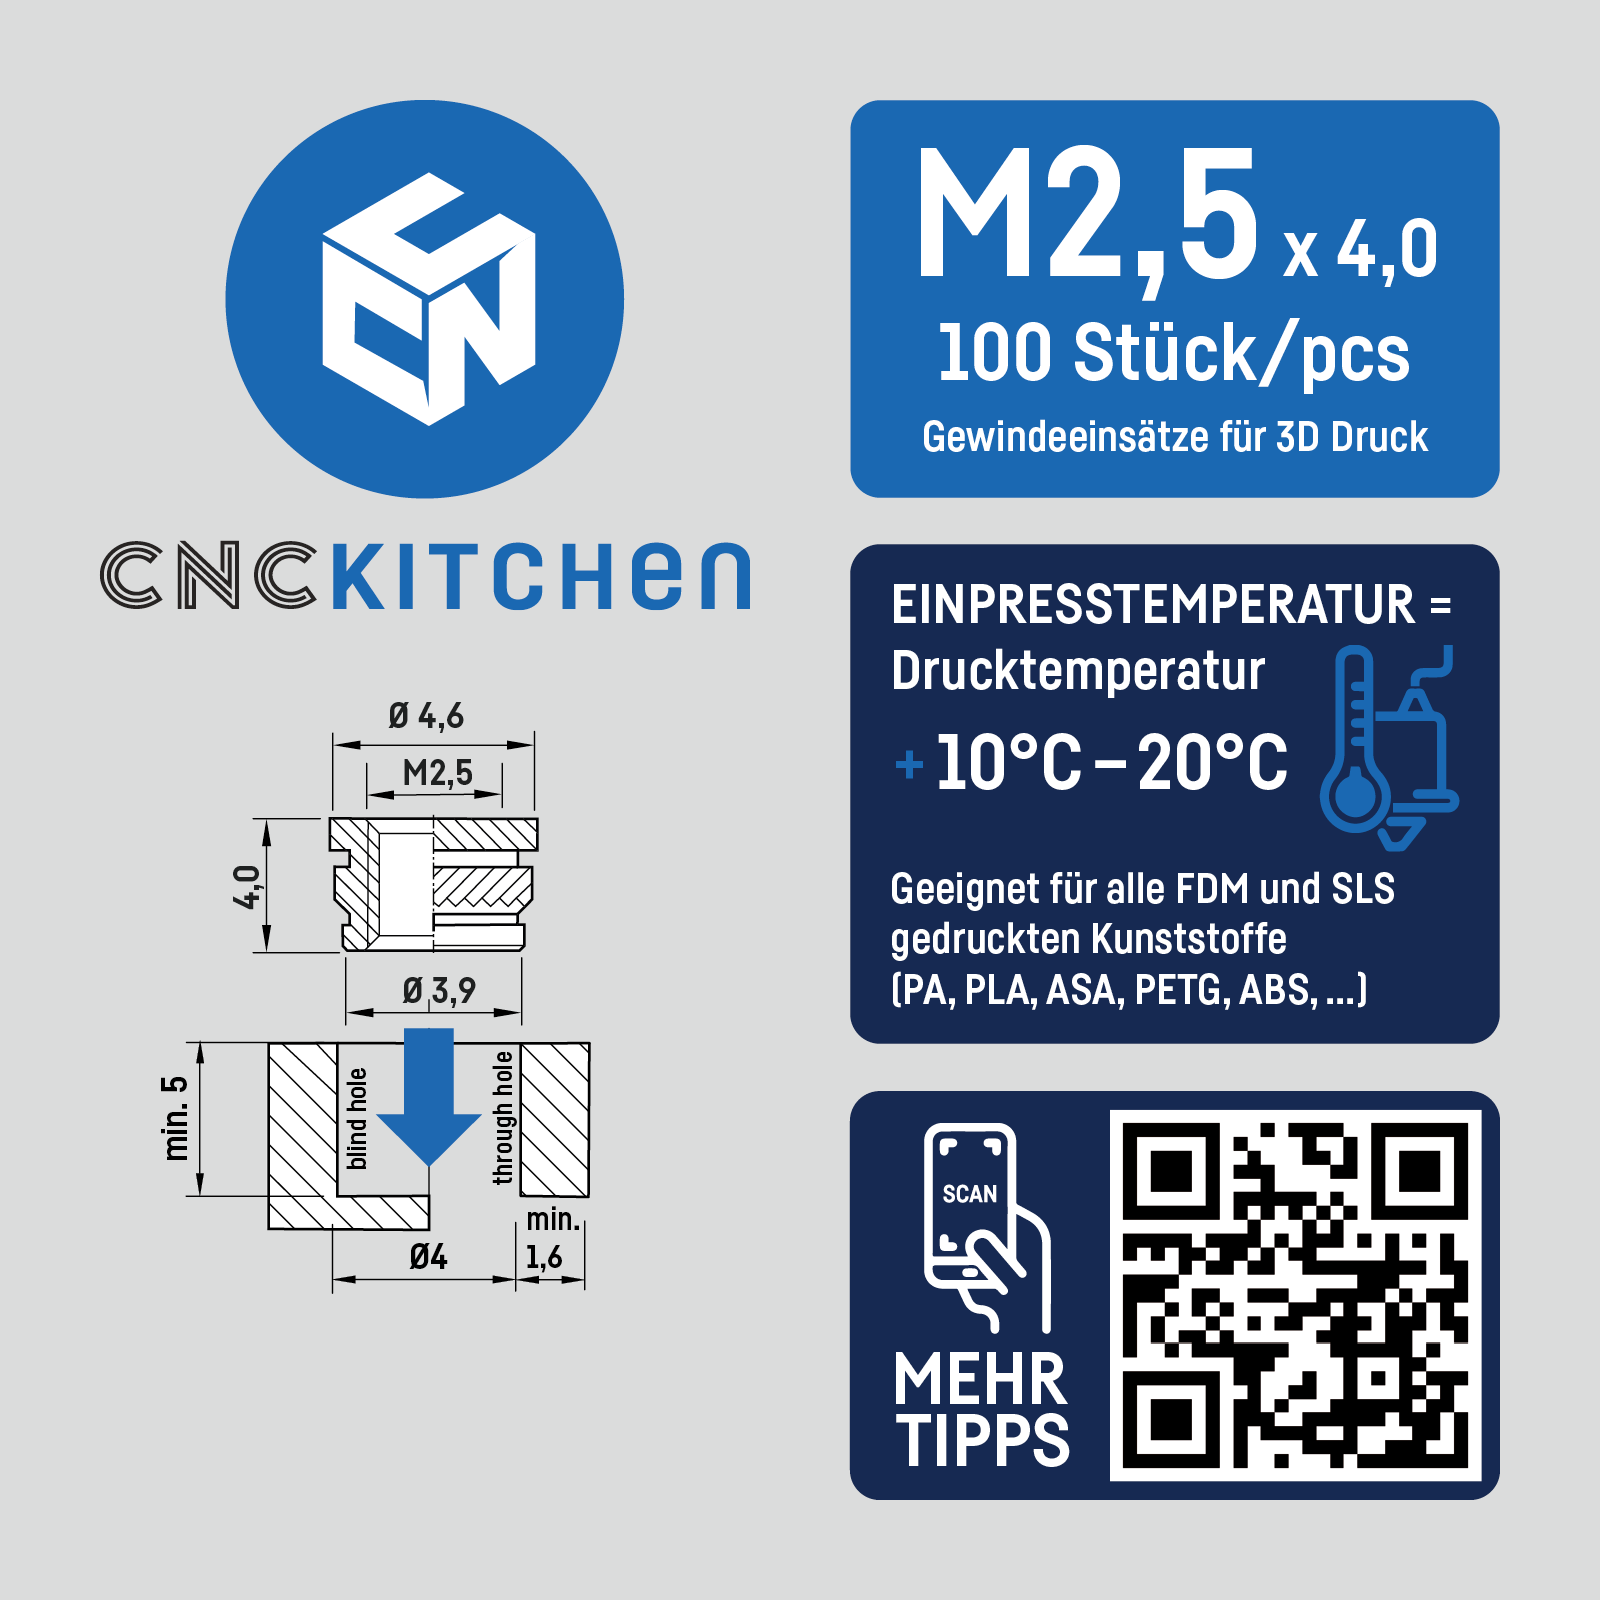 CNC Kitchen Threaded Insert M2 / M2.5 / M3 / M4 / M5 / M6 / M8 / 1.4"